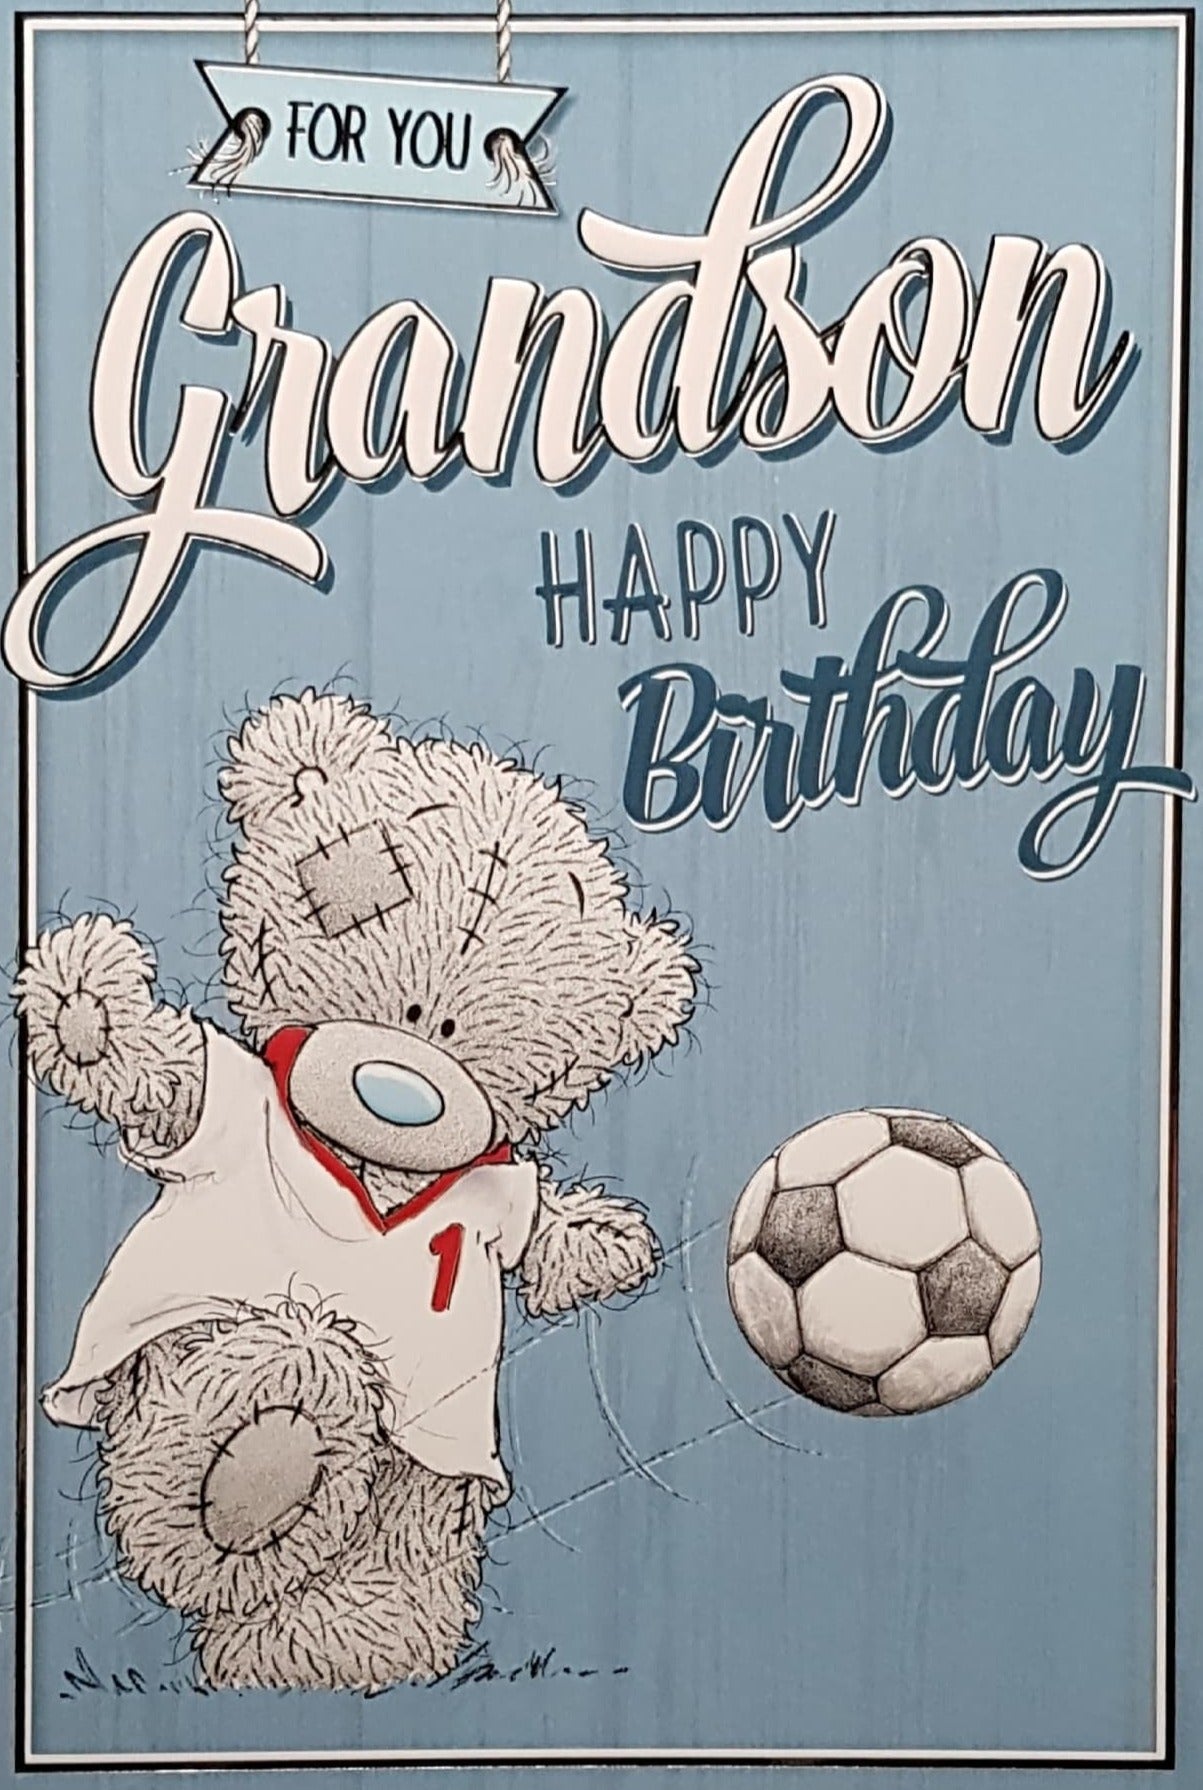 Birthday Card - Grandson - Teddy In A Jersey Kicking Football